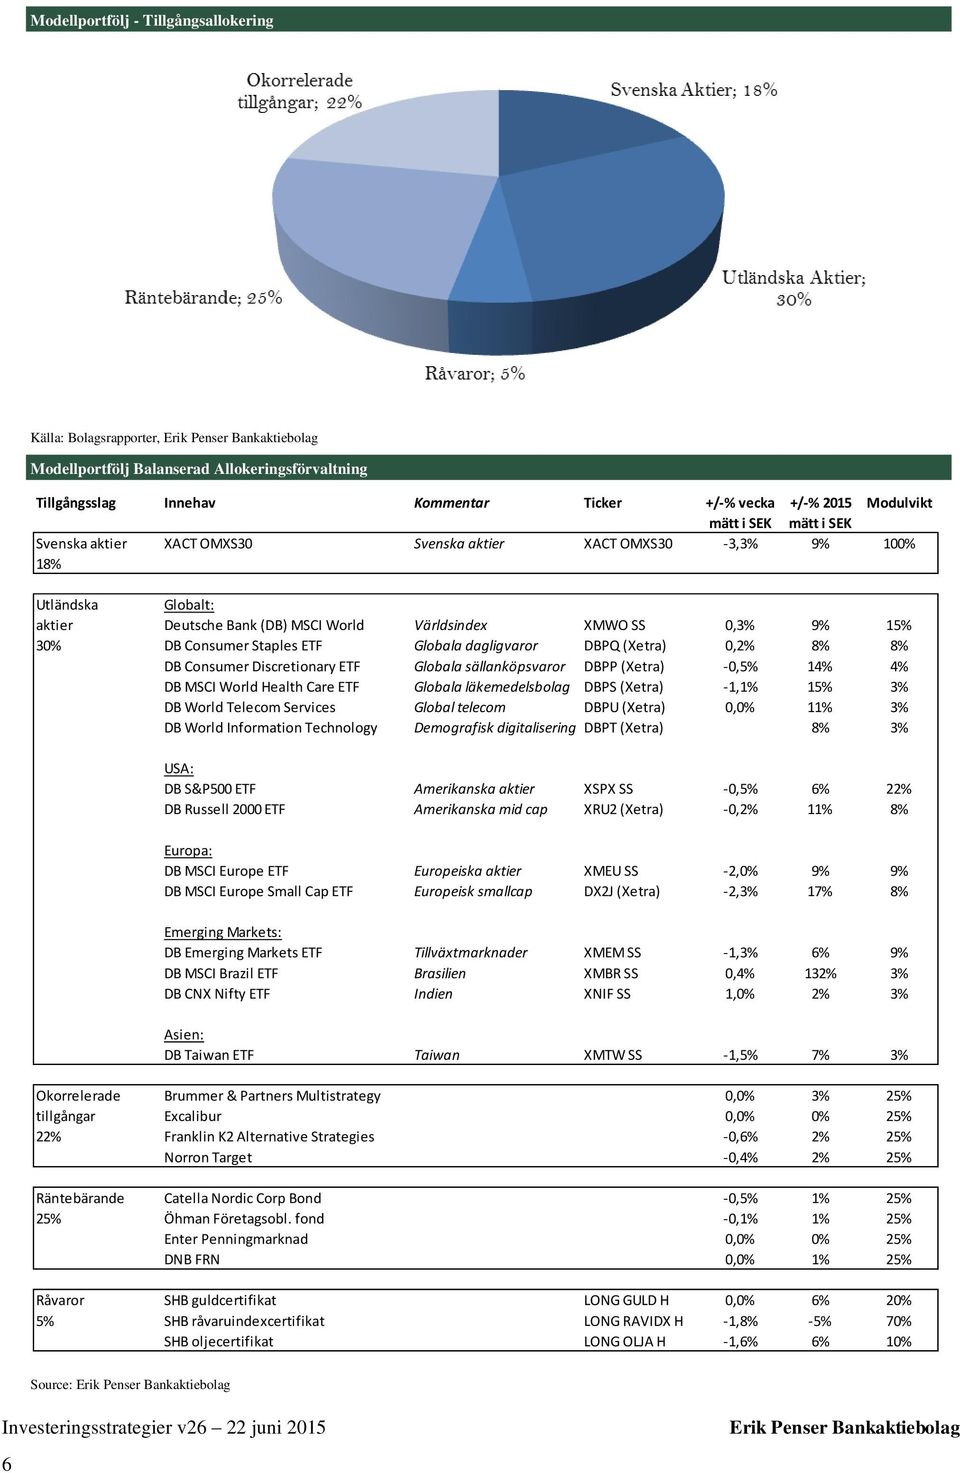 Consumer Staples ETF Globala dagligvaror DBPQ (Xetra) 0,2% 8% 8% DB Consumer Discretionary ETF Globala sällanköpsvaror DBPP (Xetra) -0,5% 14% 4% DB MSCI World Health Care ETF Globala läkemedelsbolag